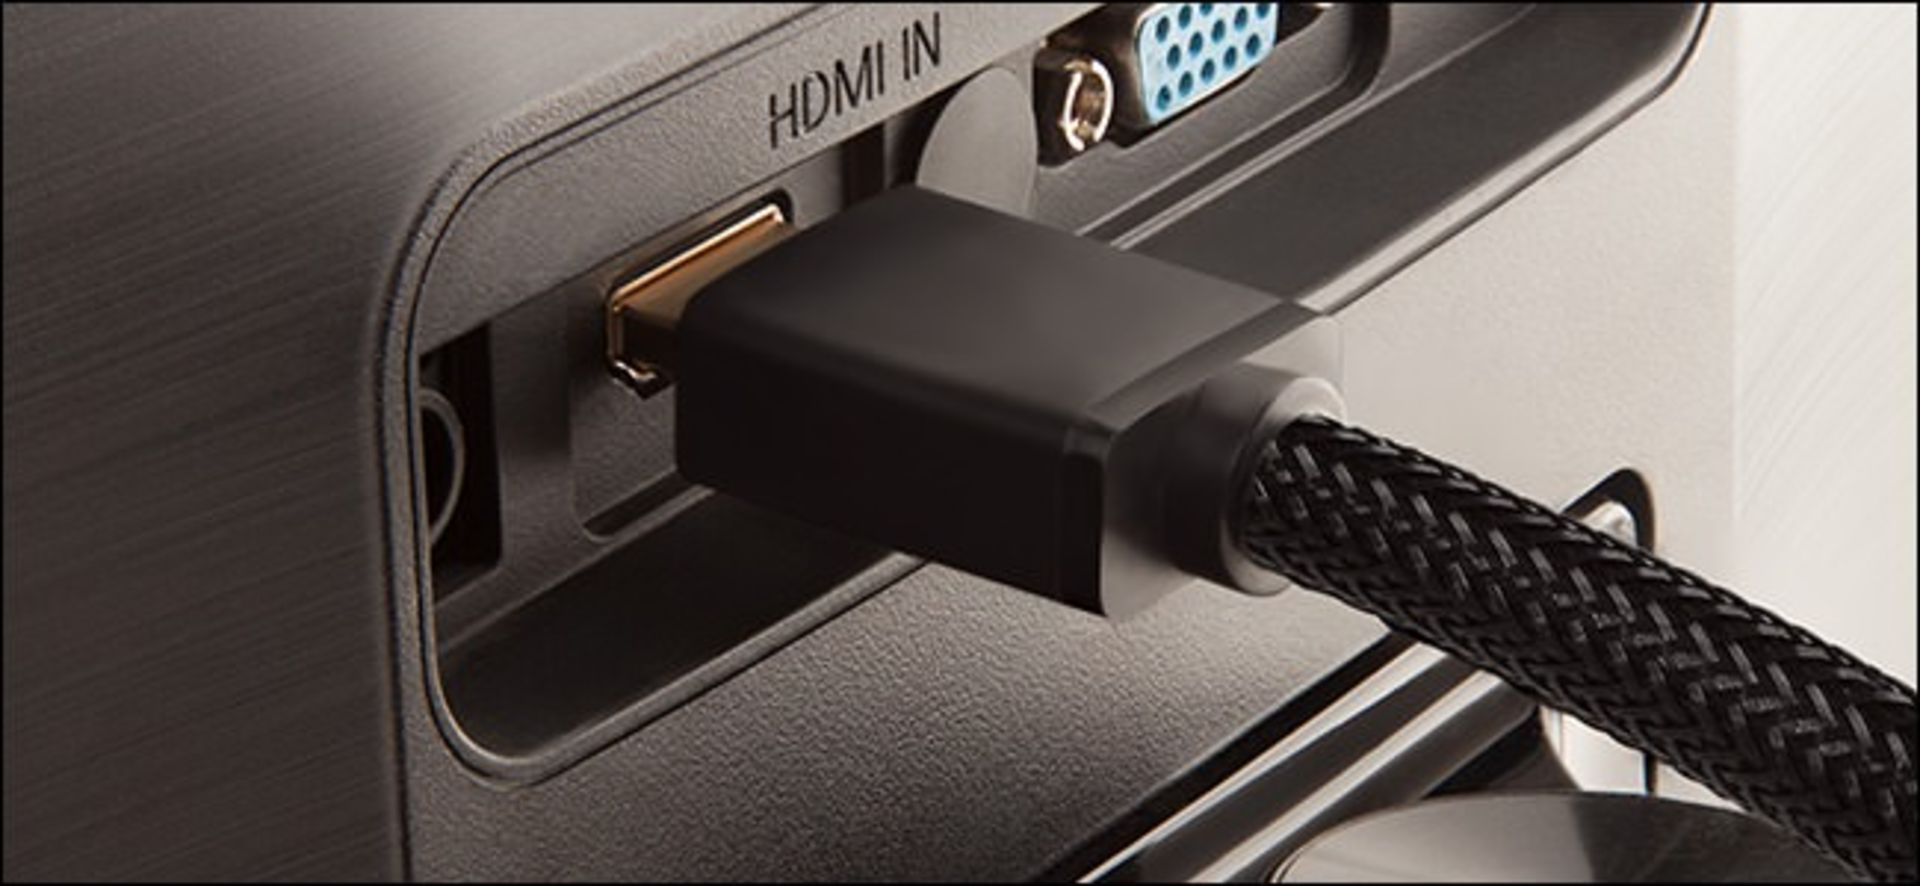 اتصال HDMI به کارت گرافیک